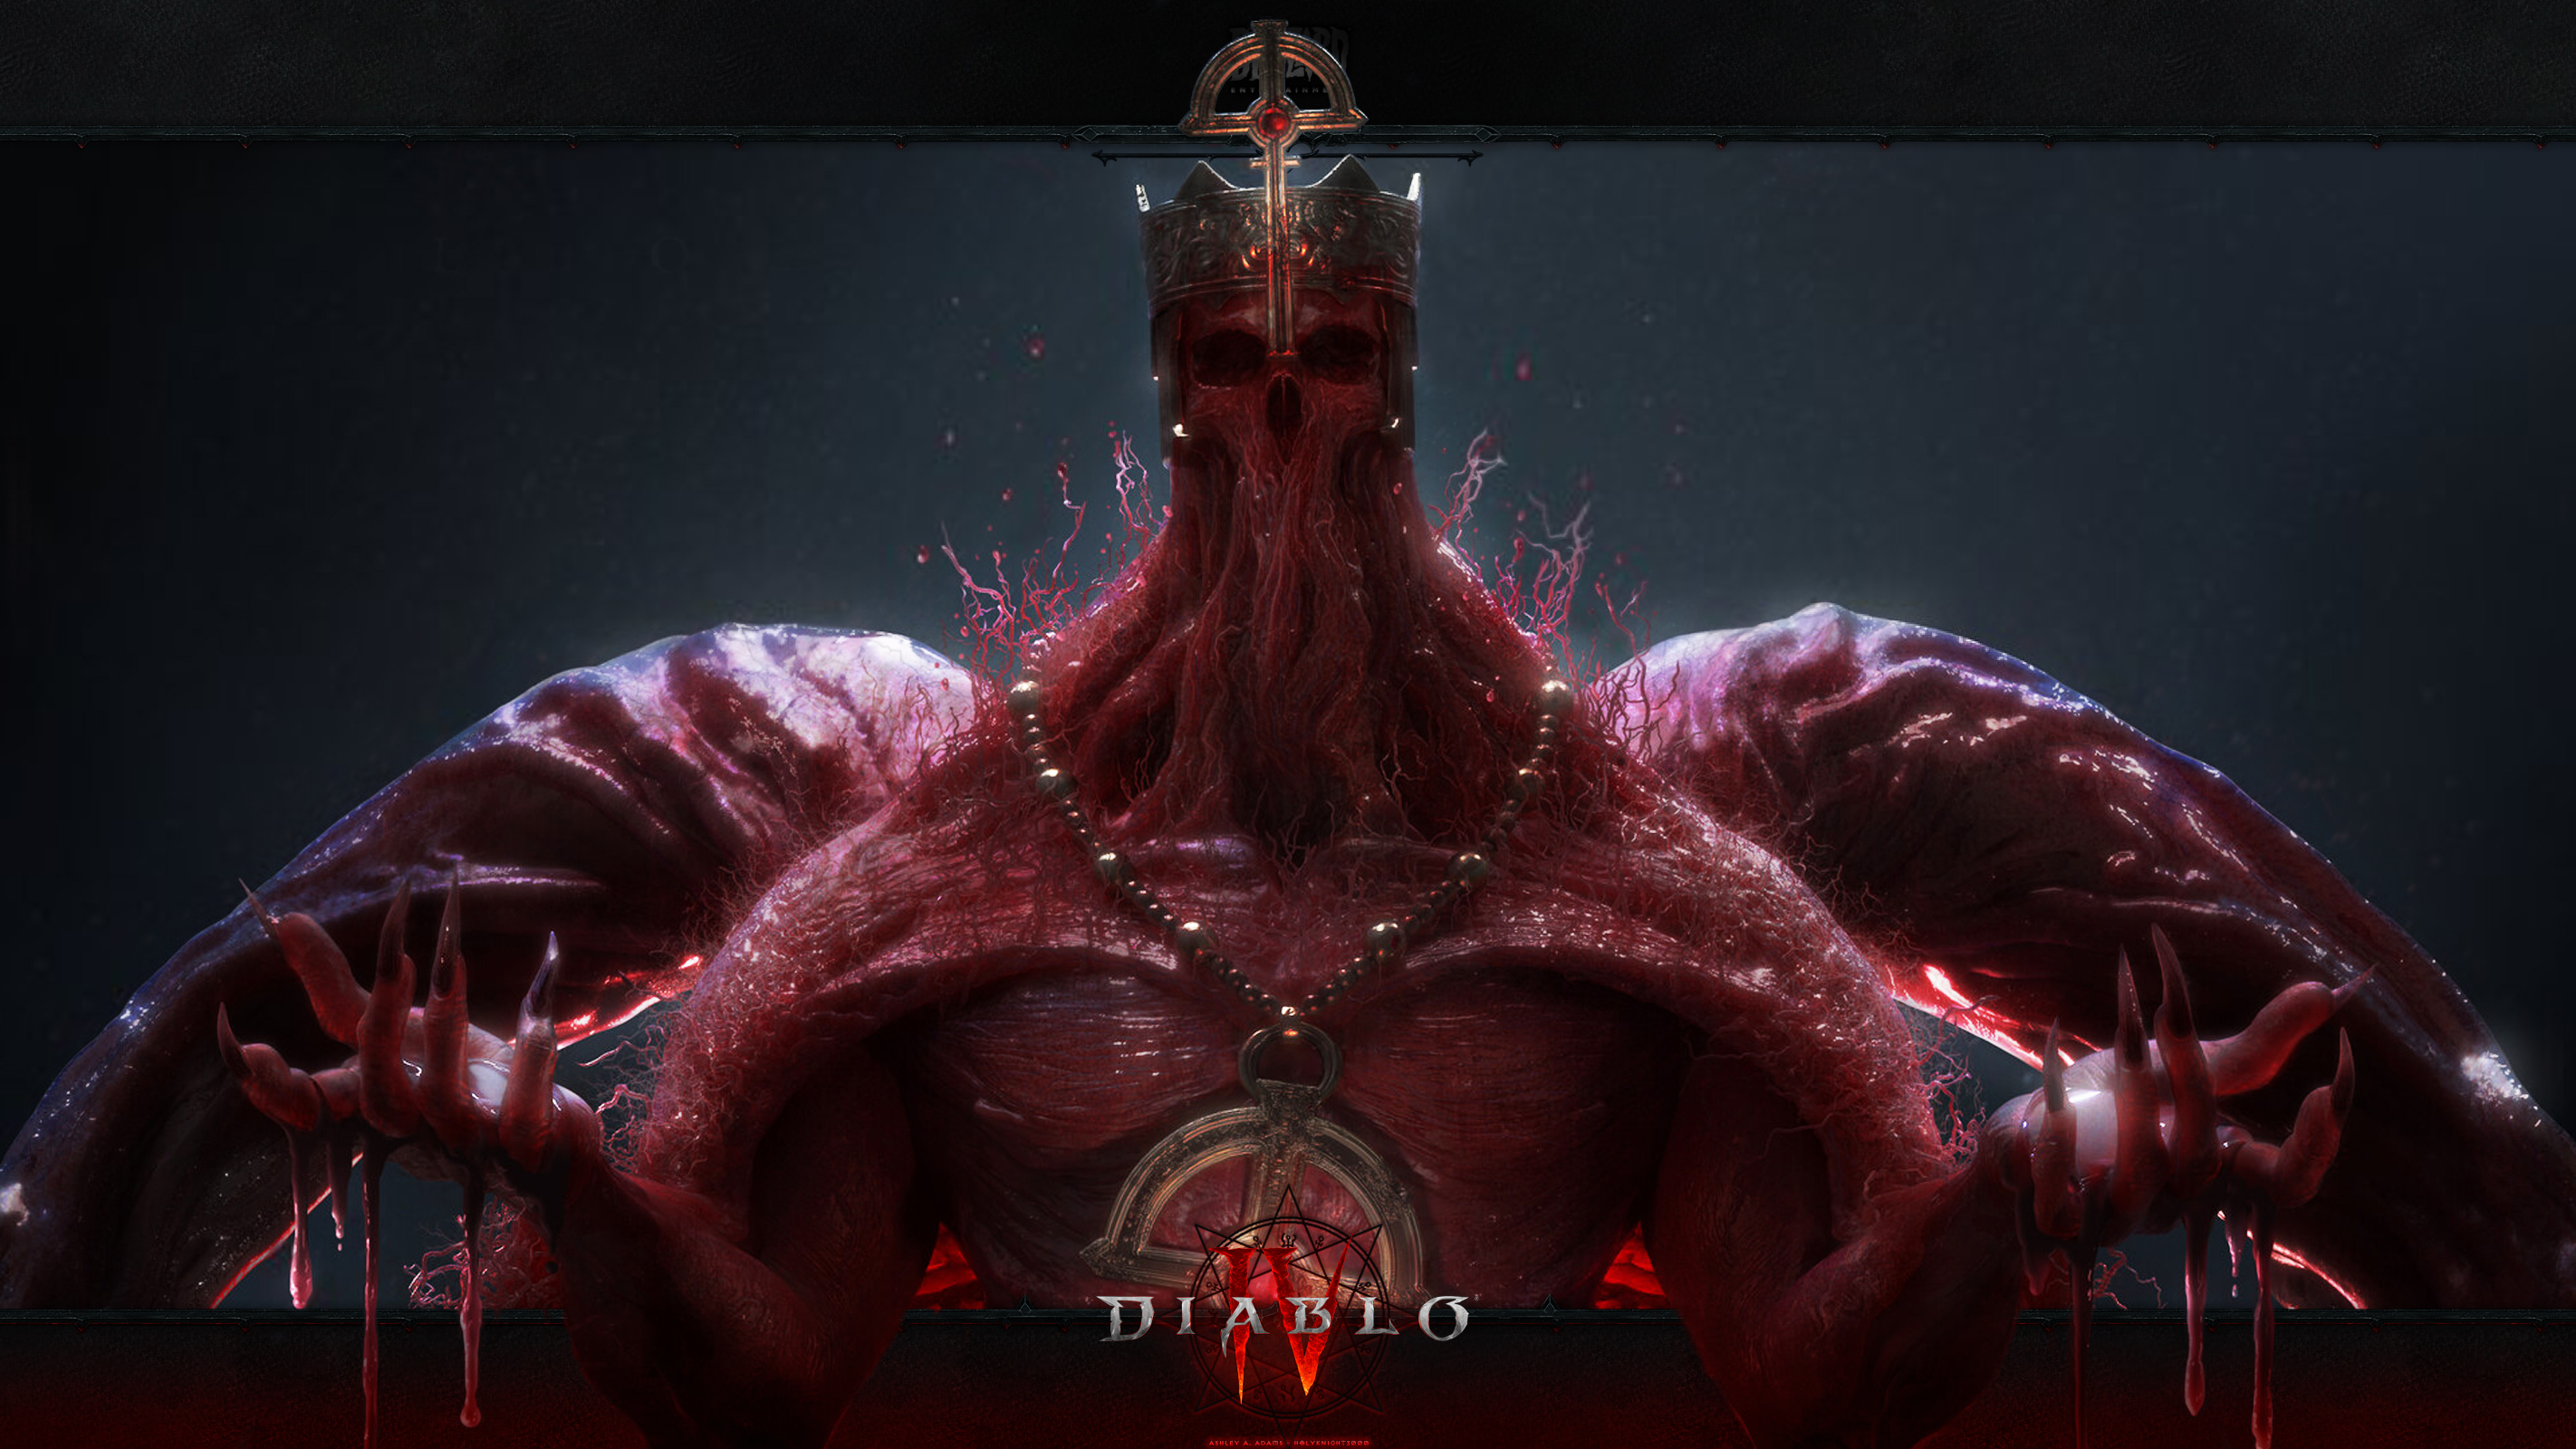 Diablo IV #23: The Blood Bishop